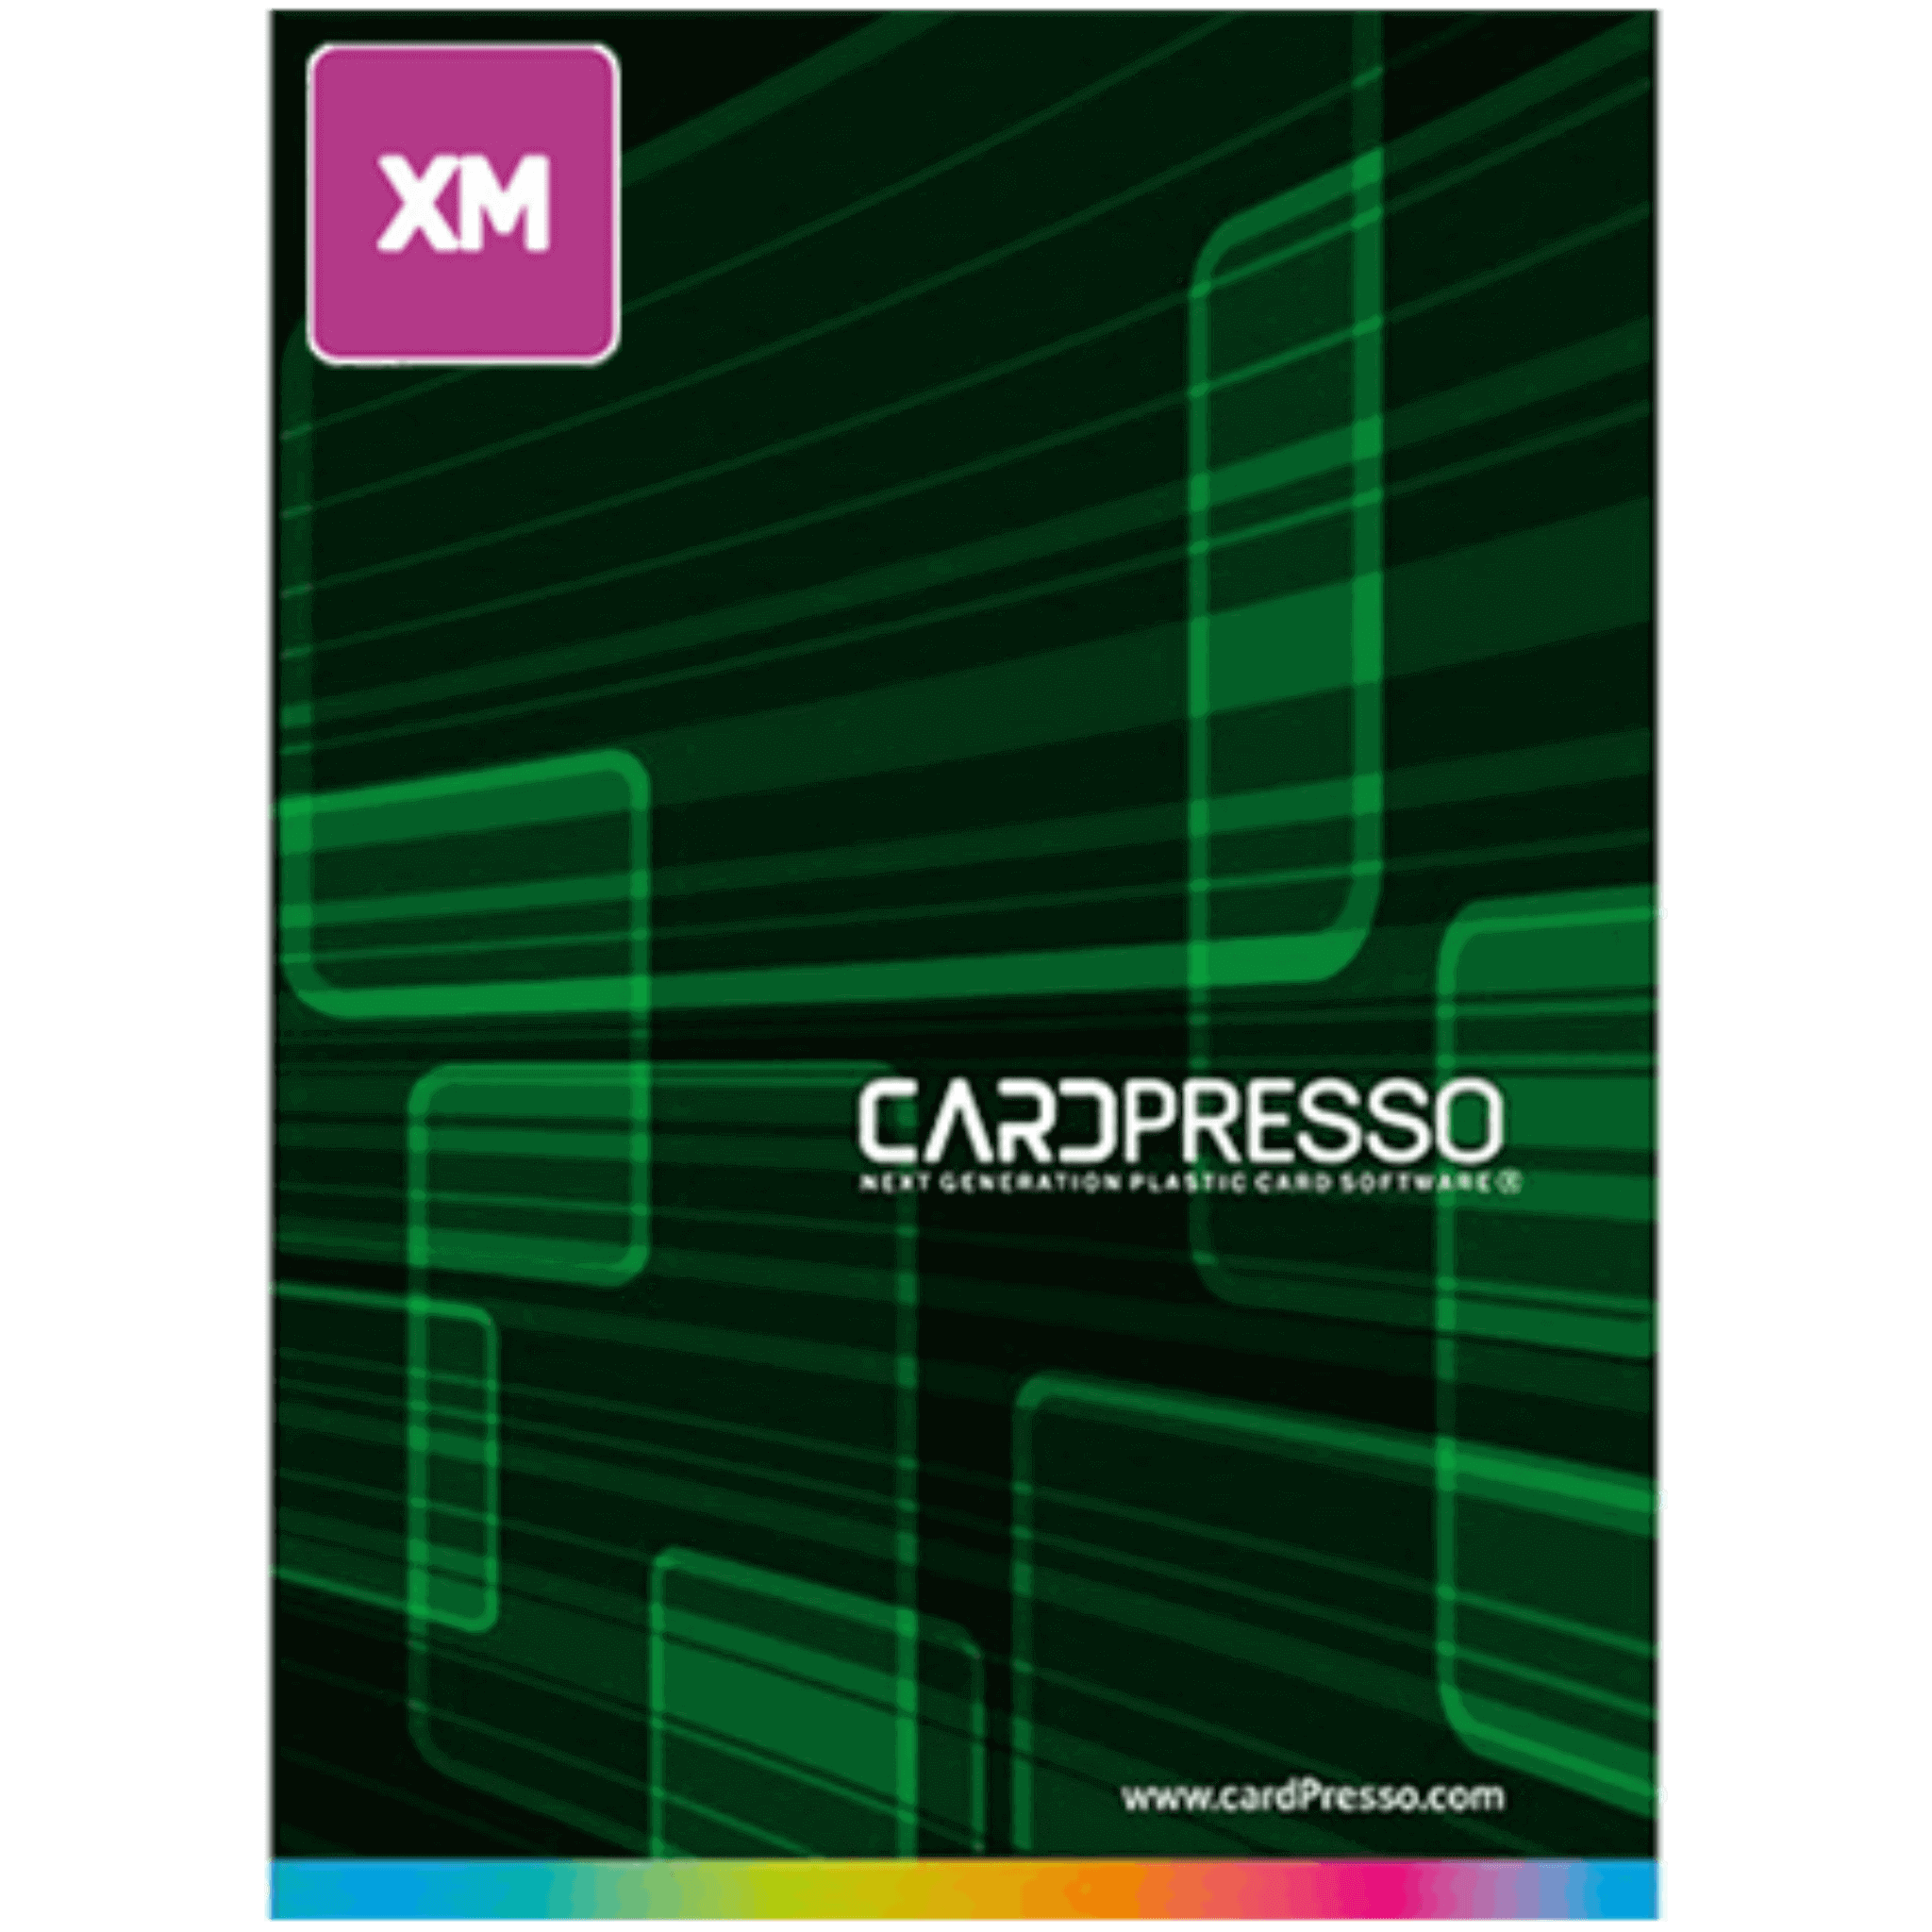 CardPresso XM ID Card Software